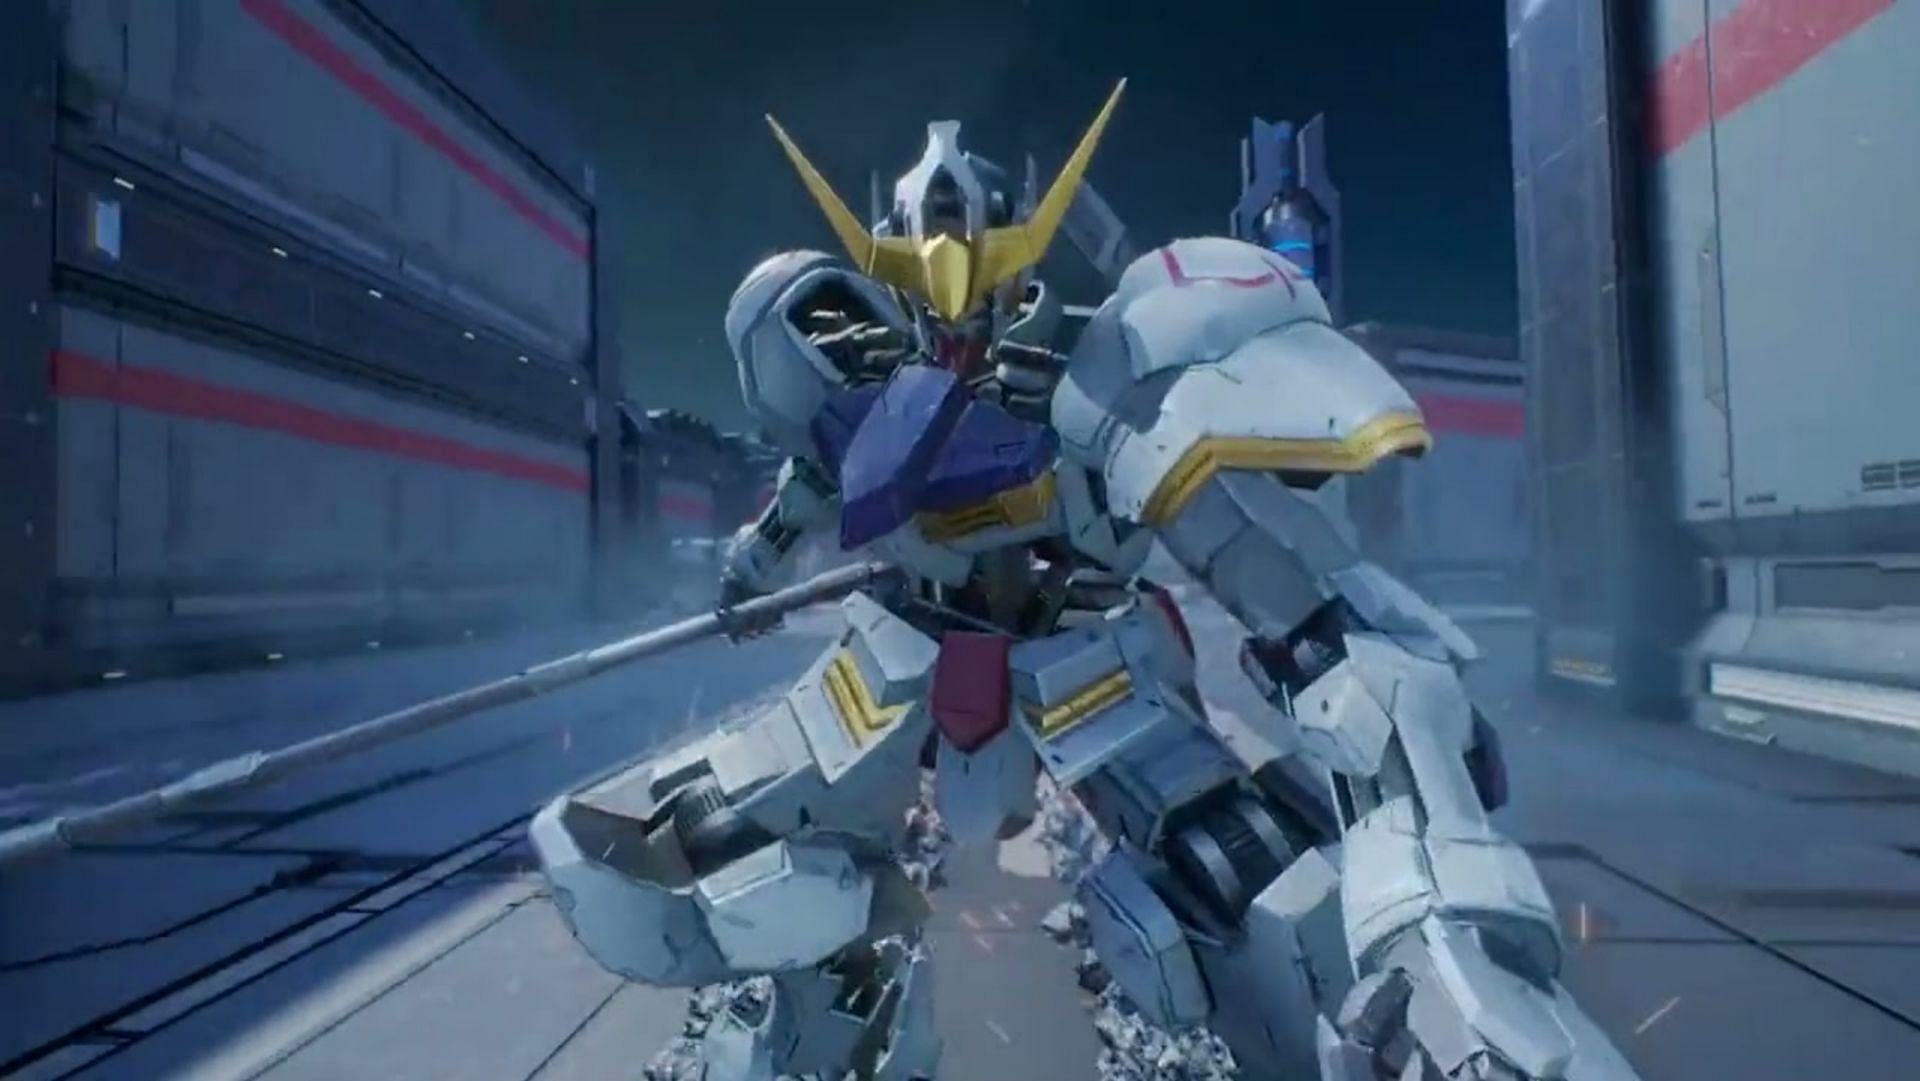 The Devil of Tekkadan, Barbatos is playable in Gundam Evolution. How does it function? (Image via Bandai Namco)